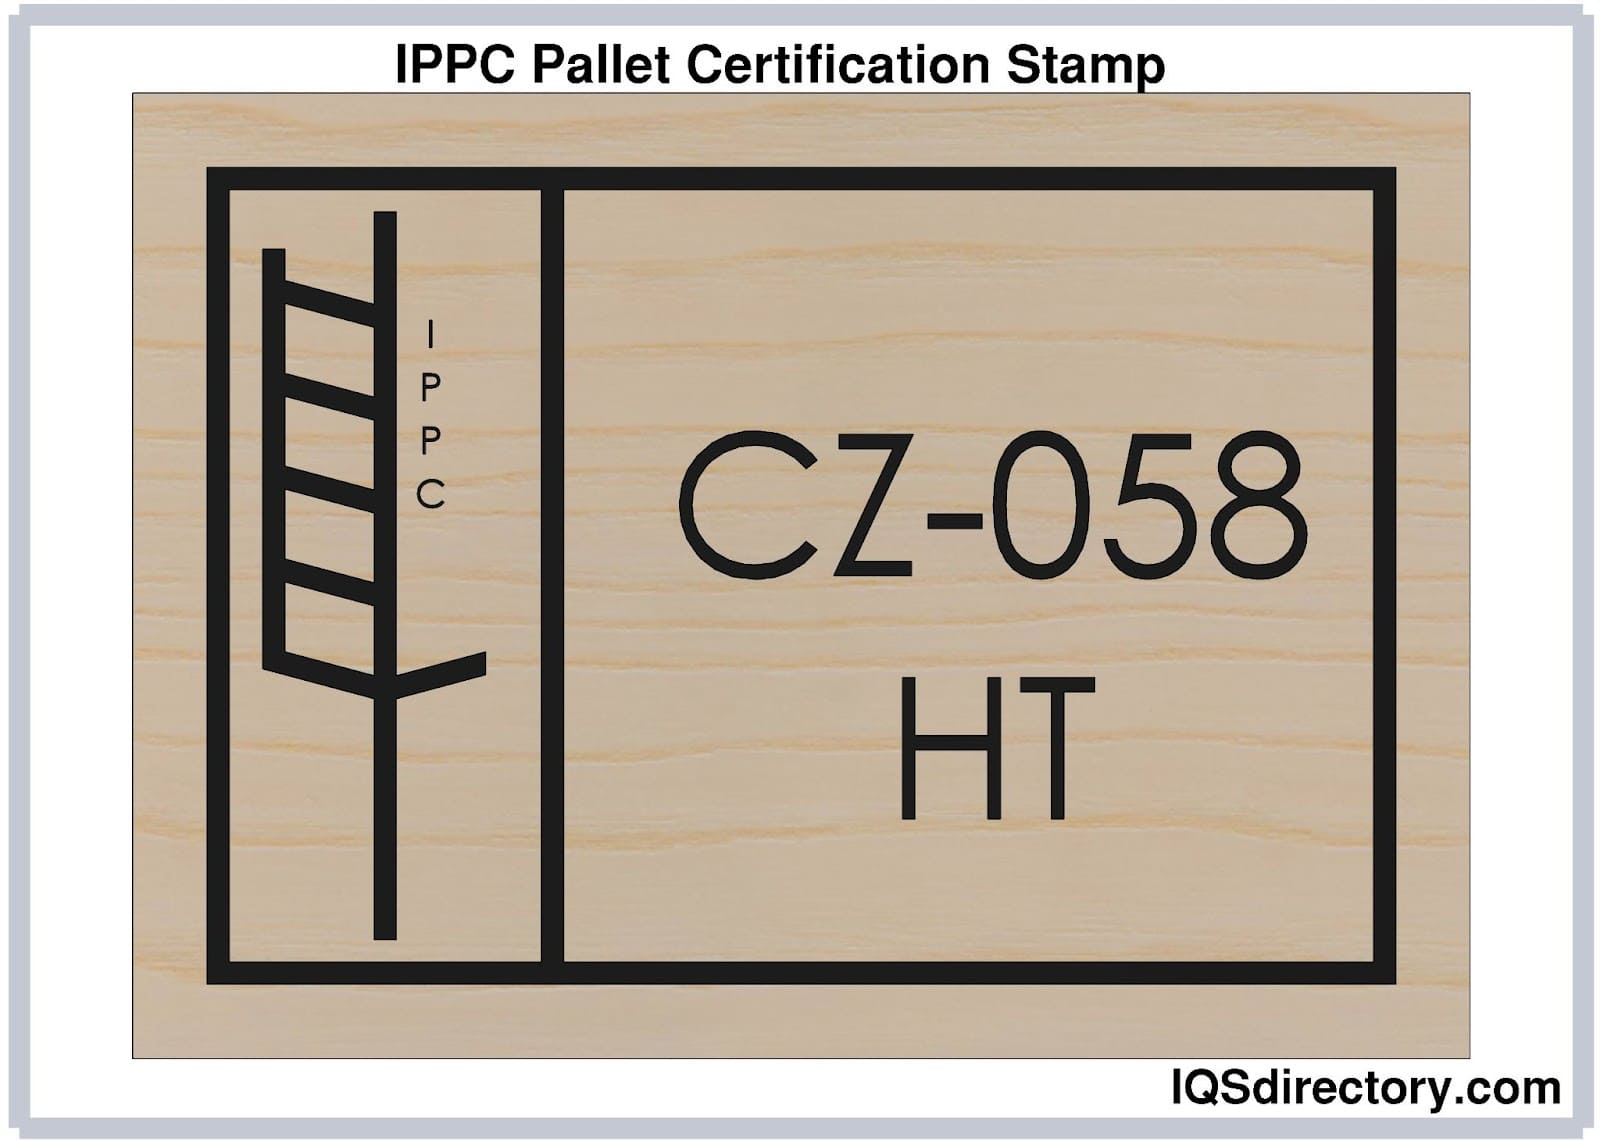 IPPC Pallet Certification Stamp